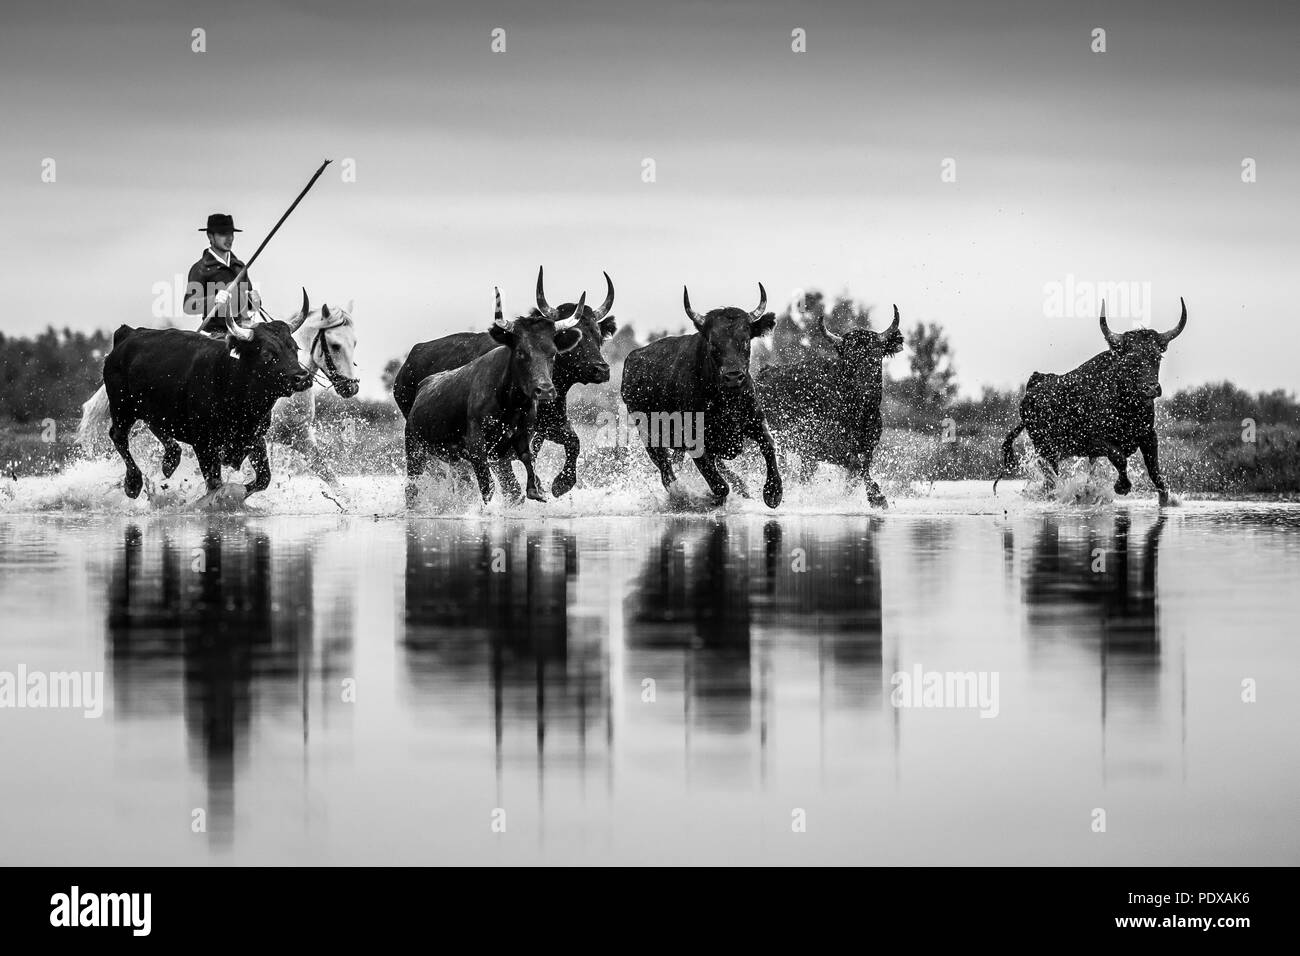 A camargue cowboy, a gardian, herds camargue bulls through the shallow water, Camargue, France Stock Photo